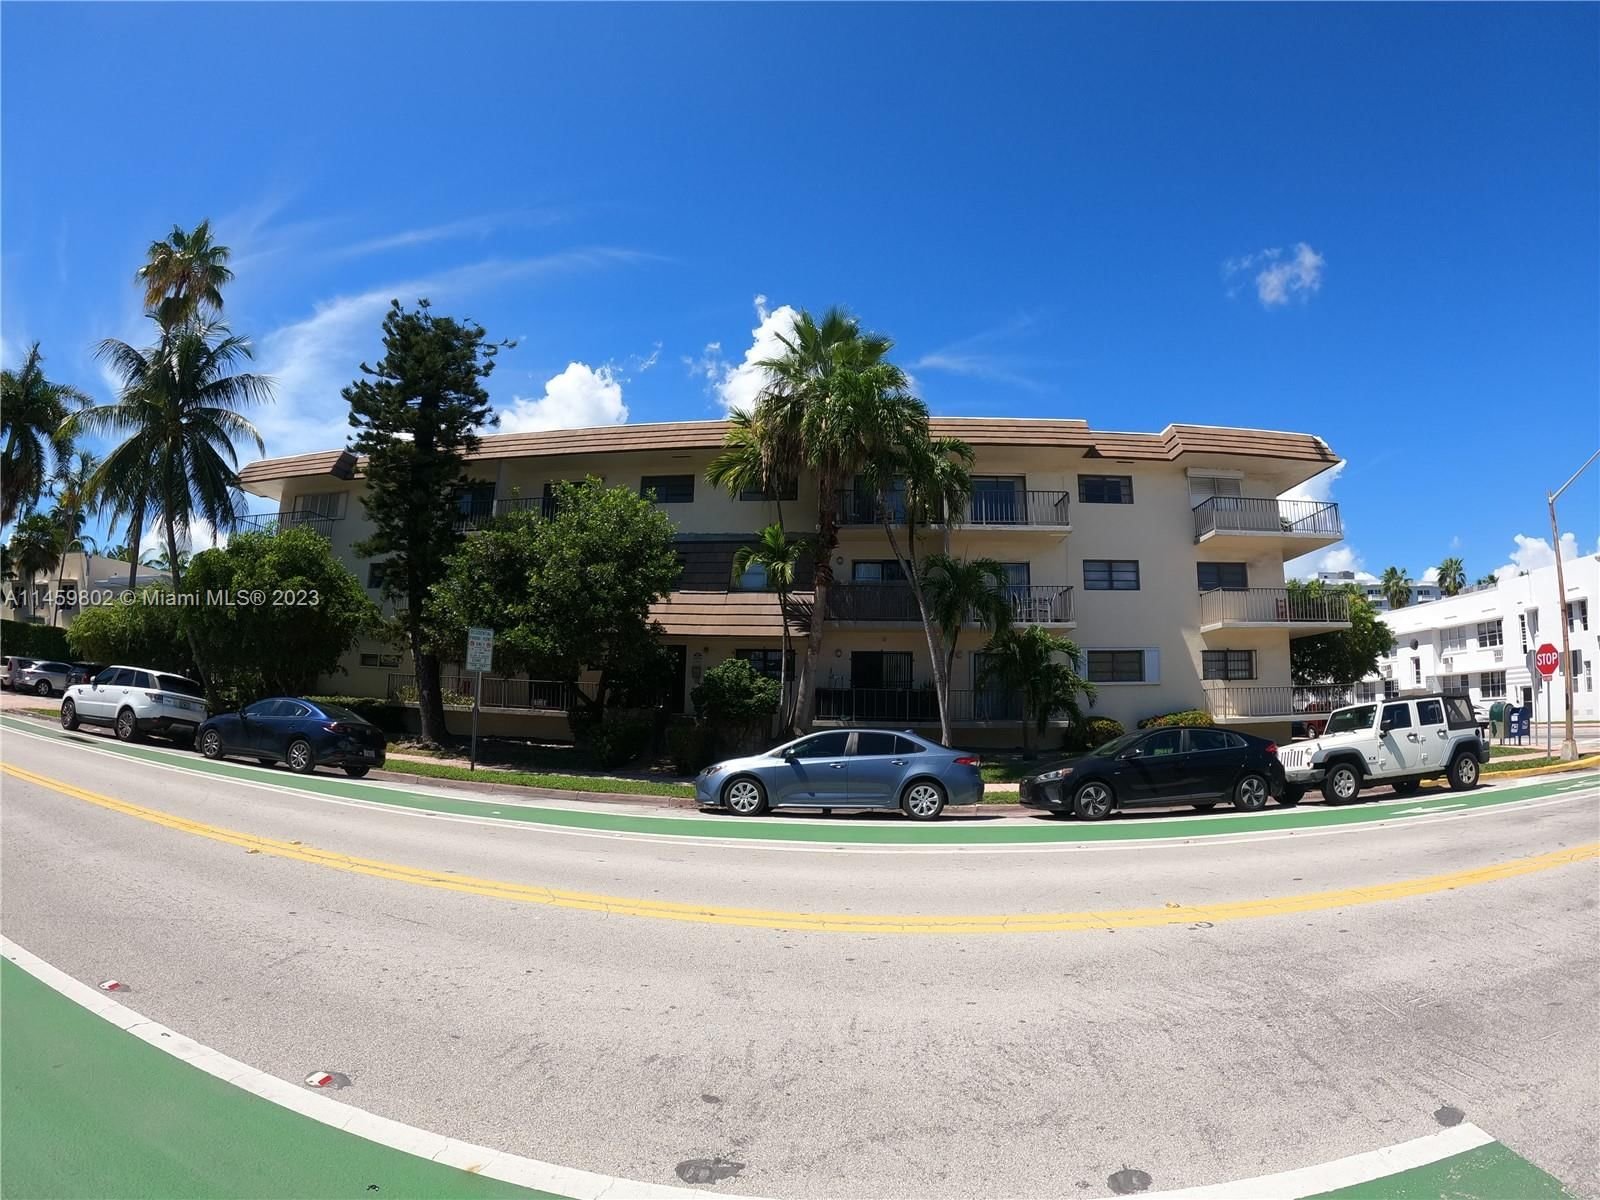 Real estate property located at 950 Euclid Ave #202, Miami-Dade County, EASTVIEW VILLAS CONDO SOU, Miami Beach, FL